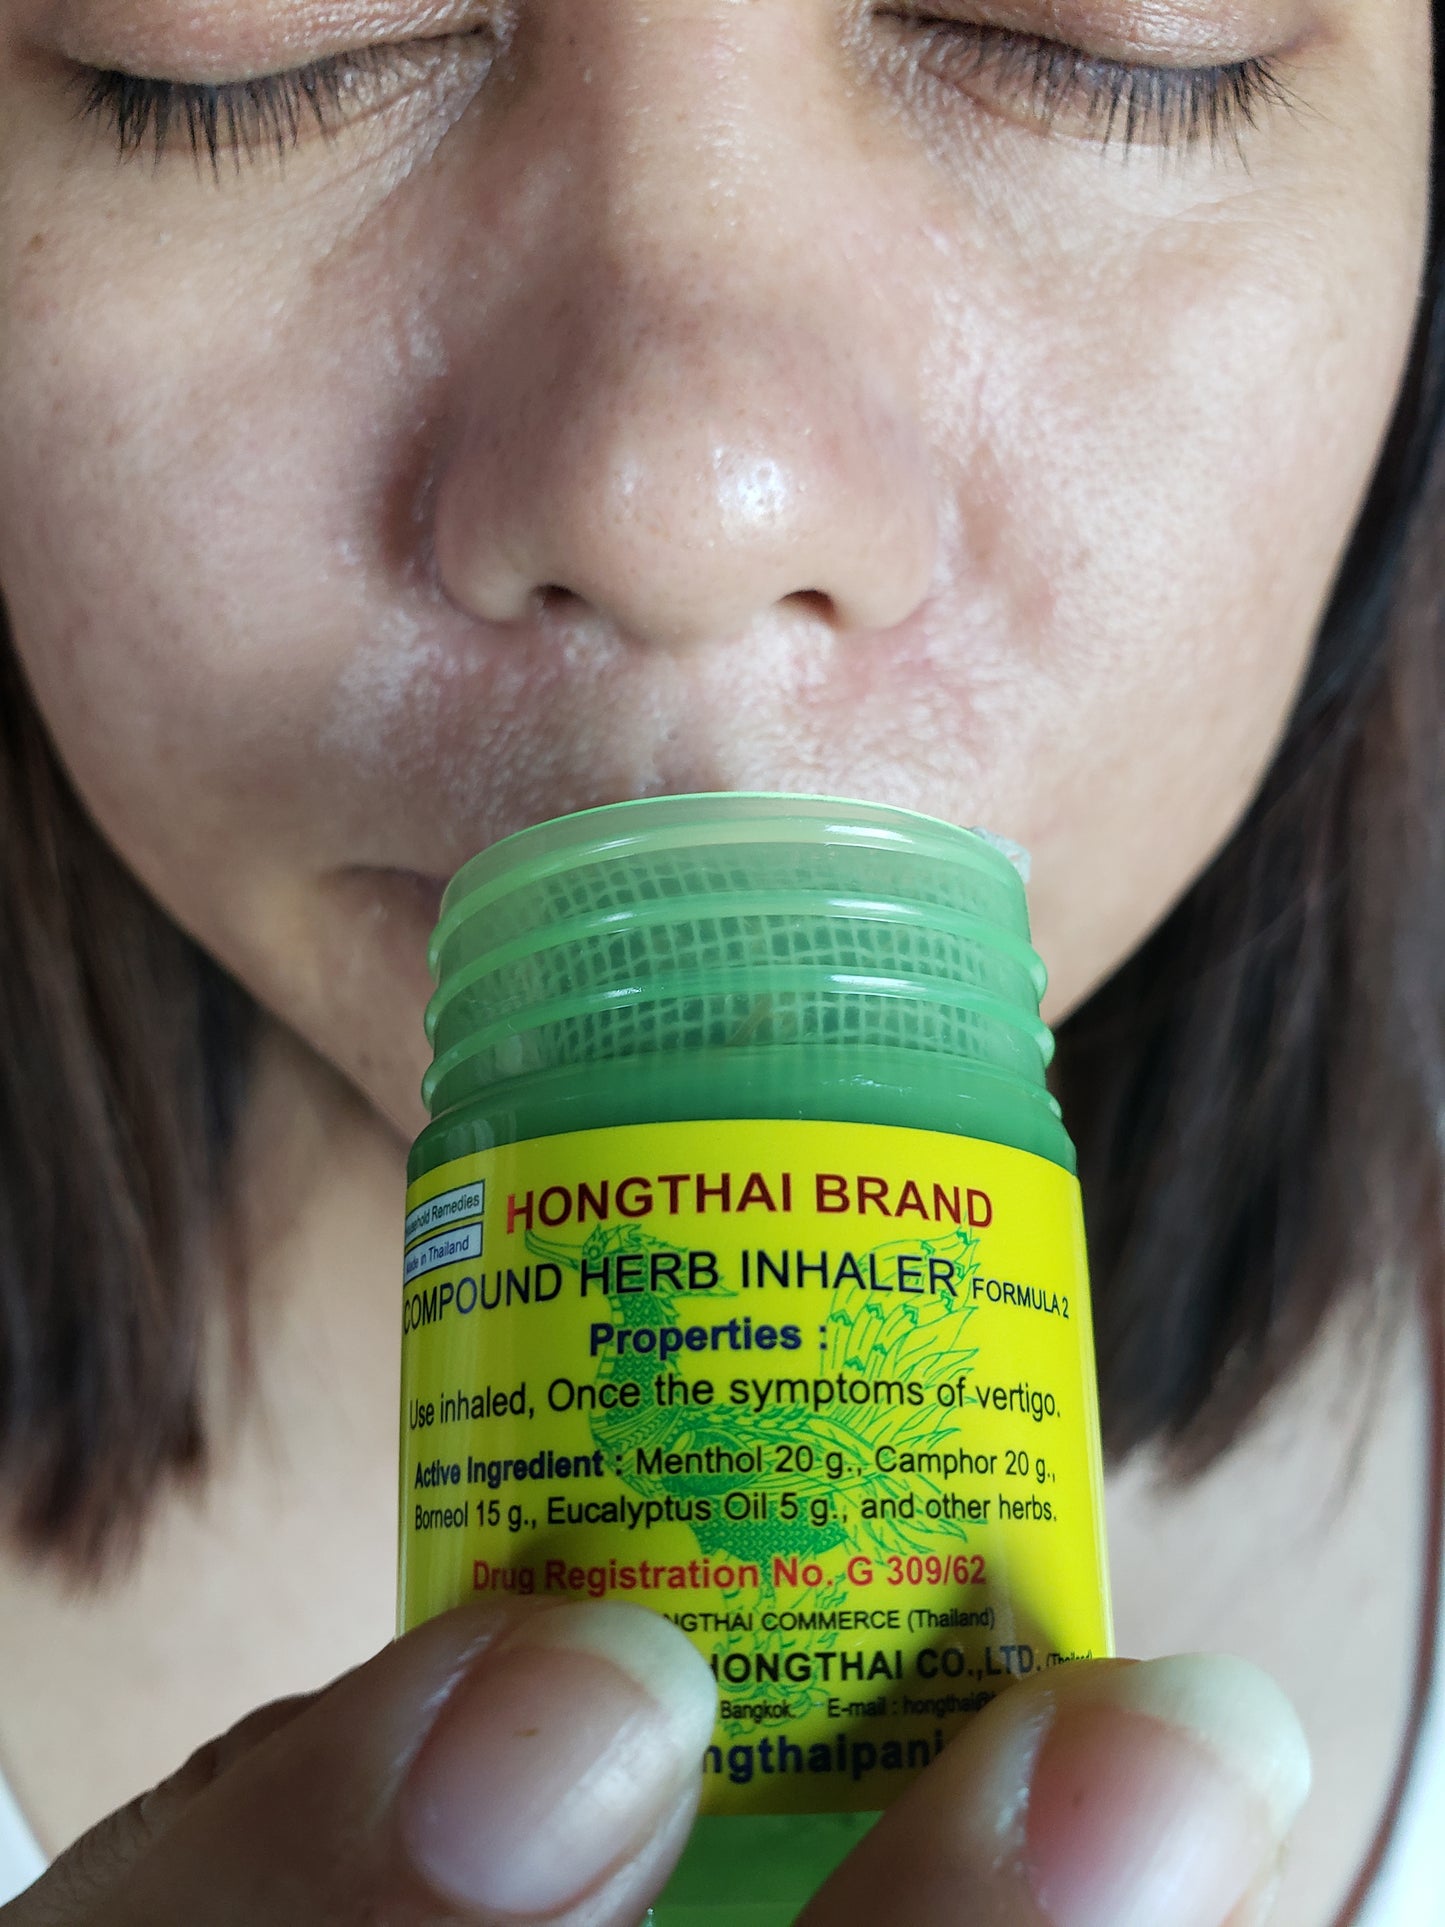 Hong Thai Brand Compound Herb Inhaler Formula 2